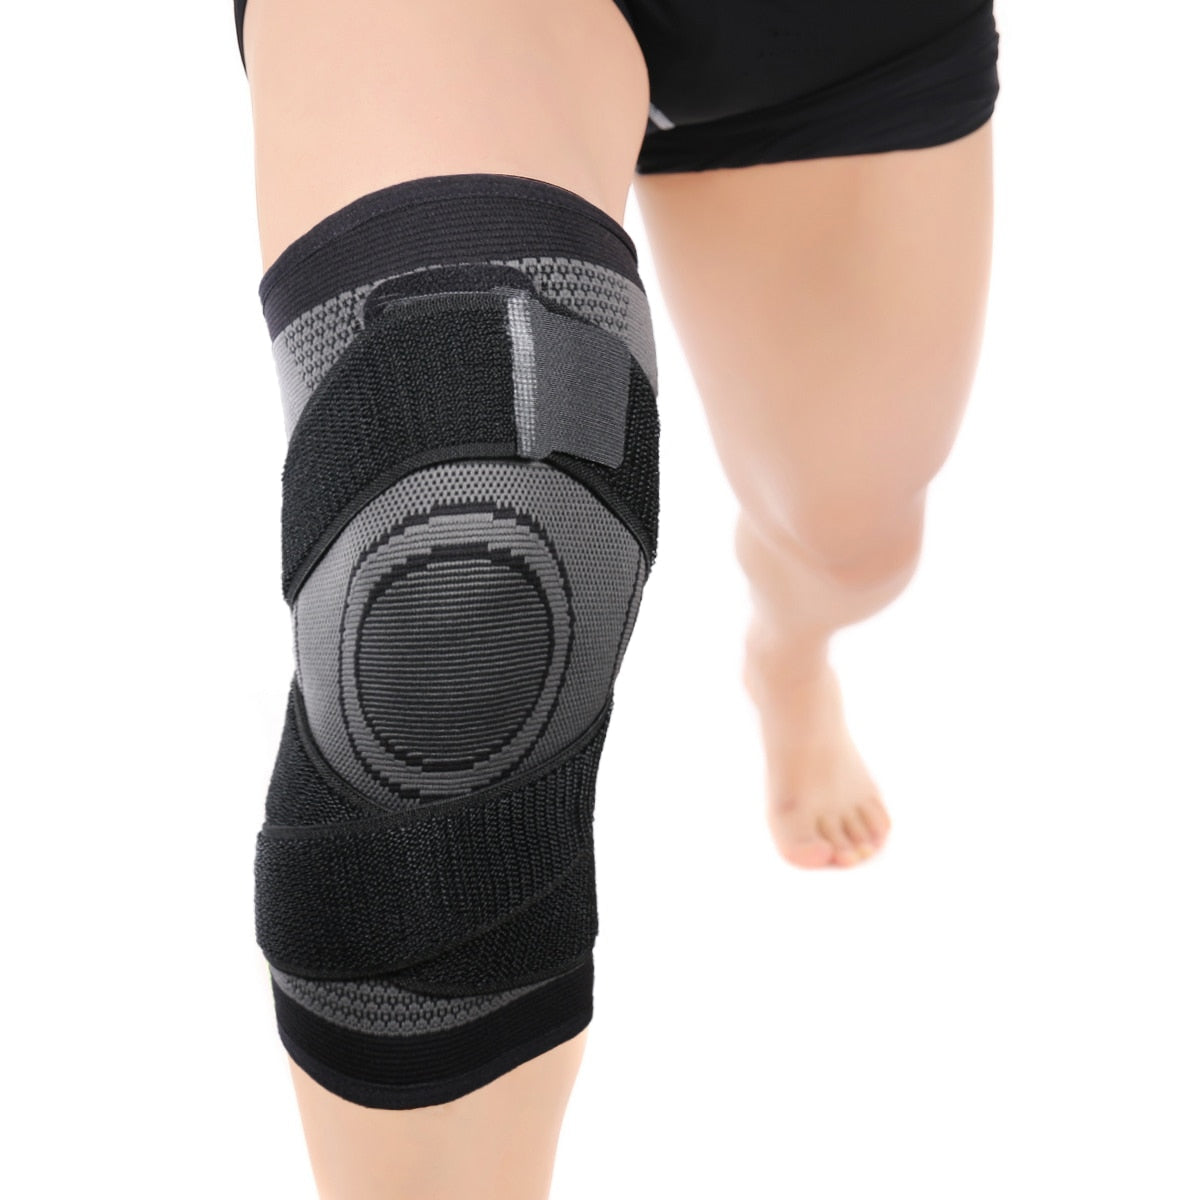 knee brace - compression knee support, elastic sleeve, patellar tendon, velcro strap, arthritis, meniscus, osteoarthritis, acl